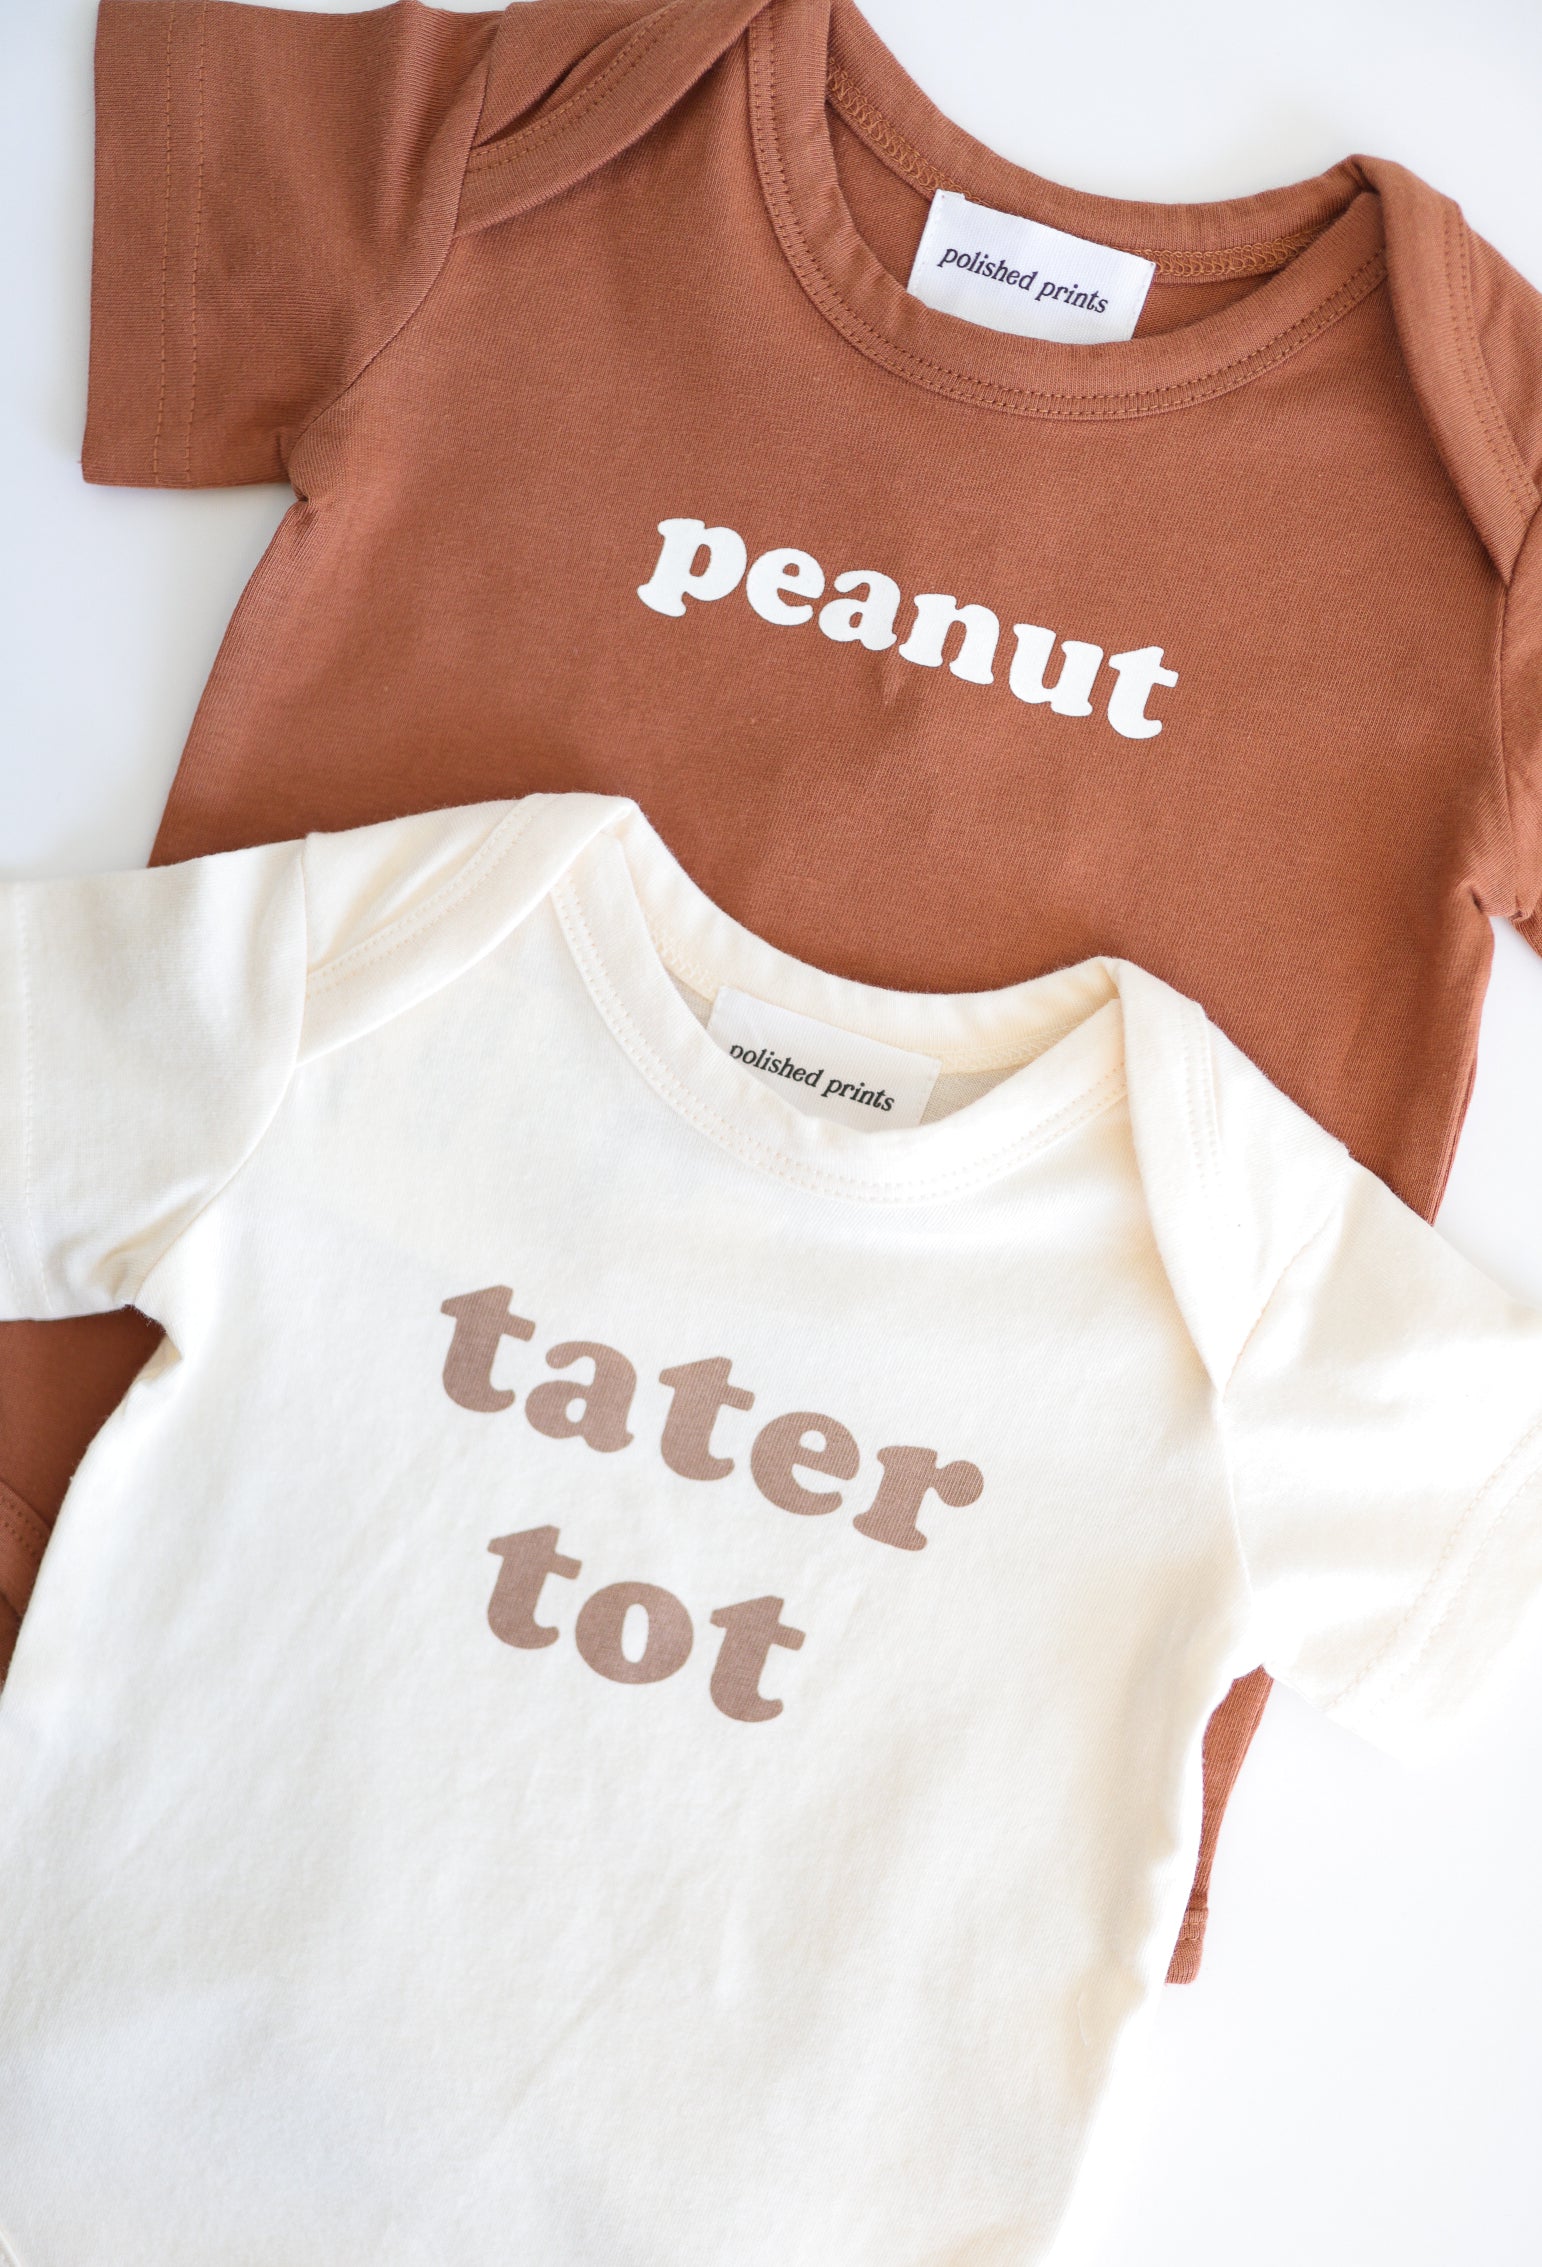 Peanut Organic Cotton Baby Onesie